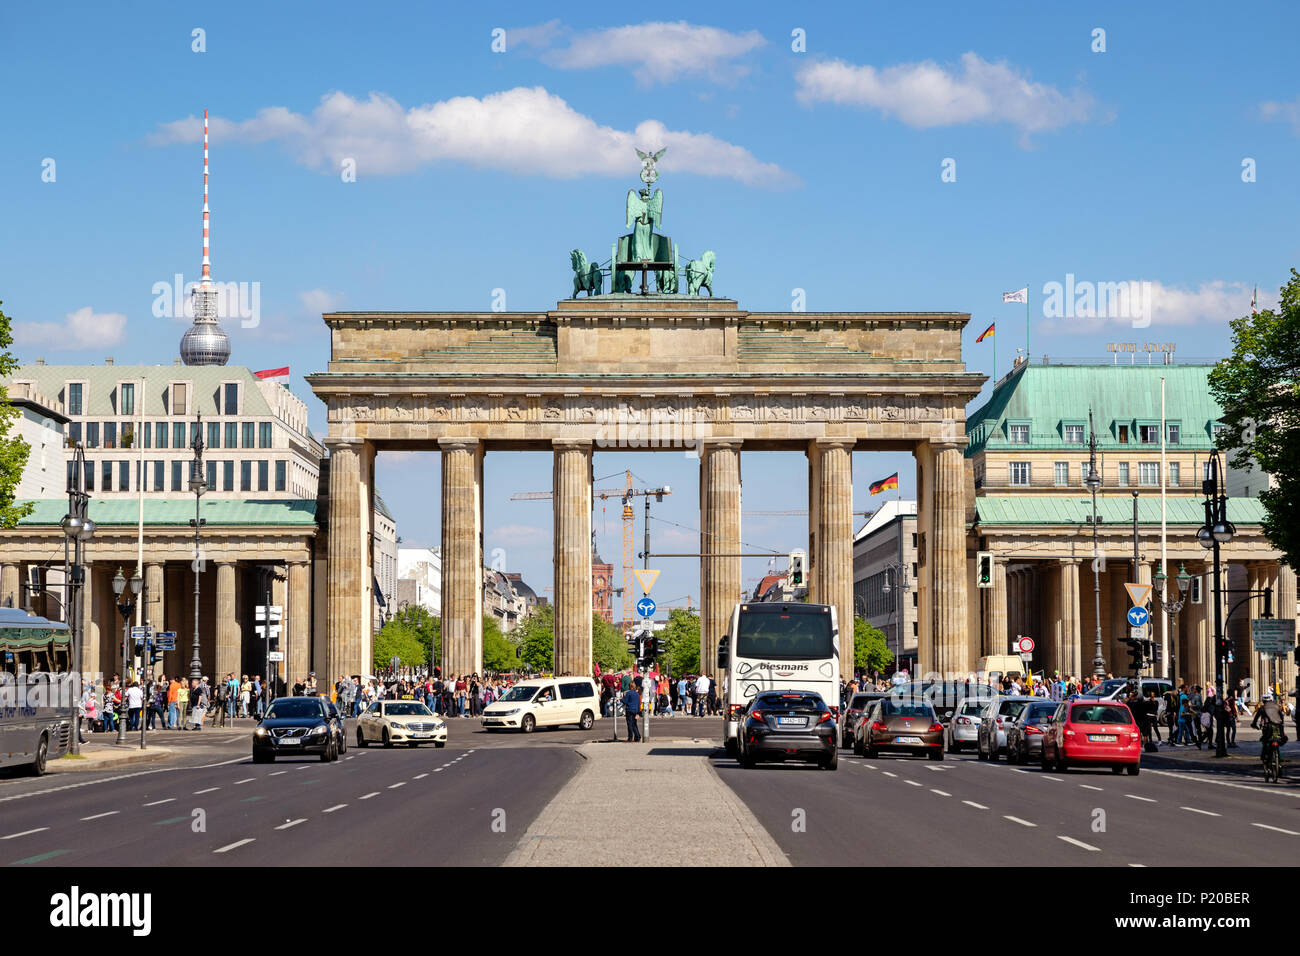 BERLIN, GERMANY - APRIL 28, 2018: Famous German landmark and national symbol Brandenburger Tor (Brandenburg Gate) in Berlin. Stock Photo